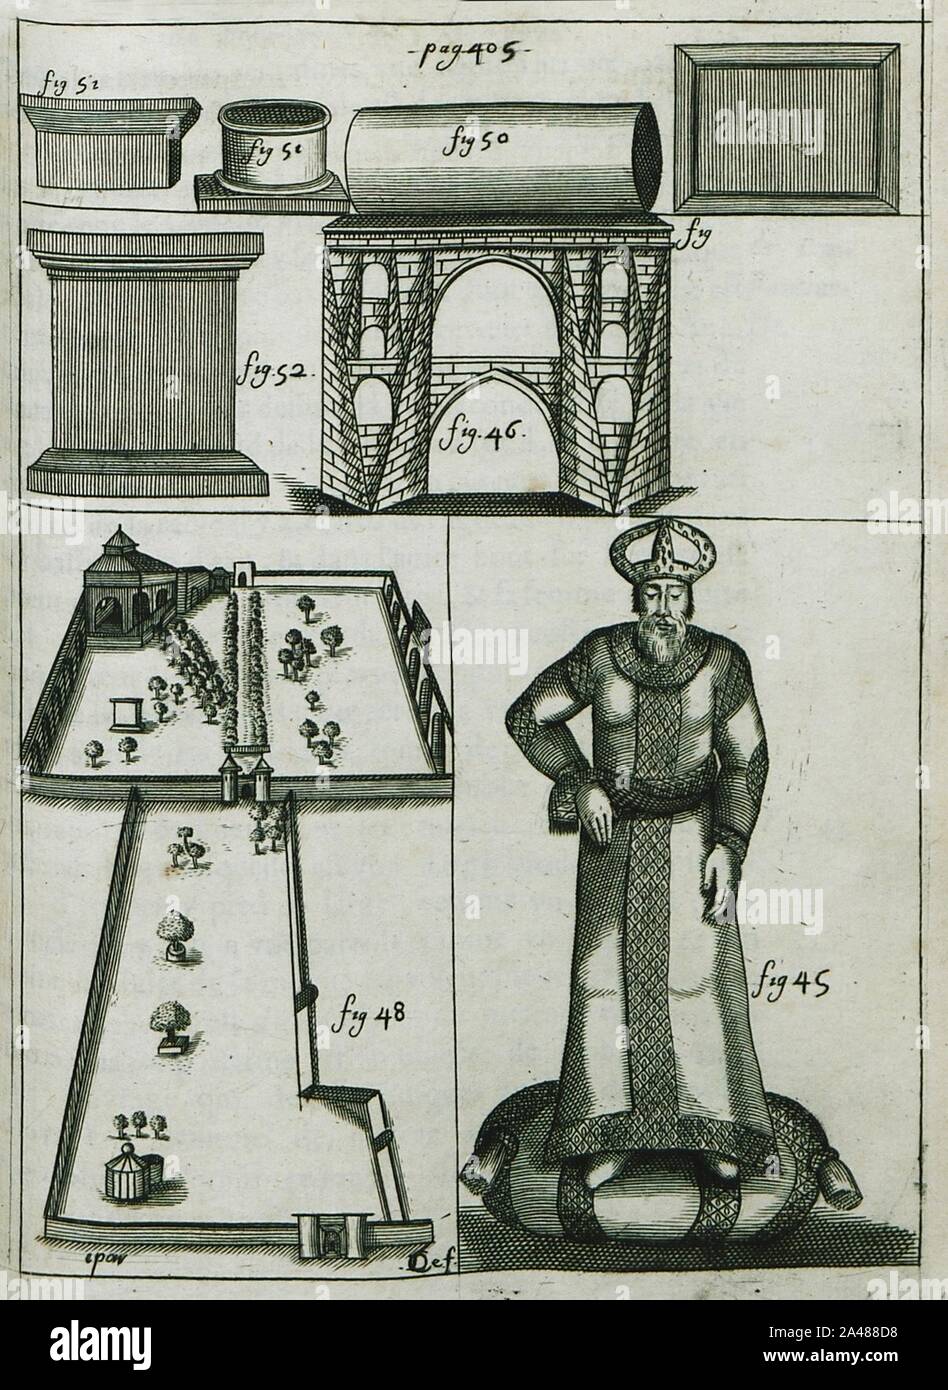 Abb. 46 Osmanischen Zisterne in der Belgrader Wald in Konstantinopel - Monconys Balthasar De - 1665. Stockfoto